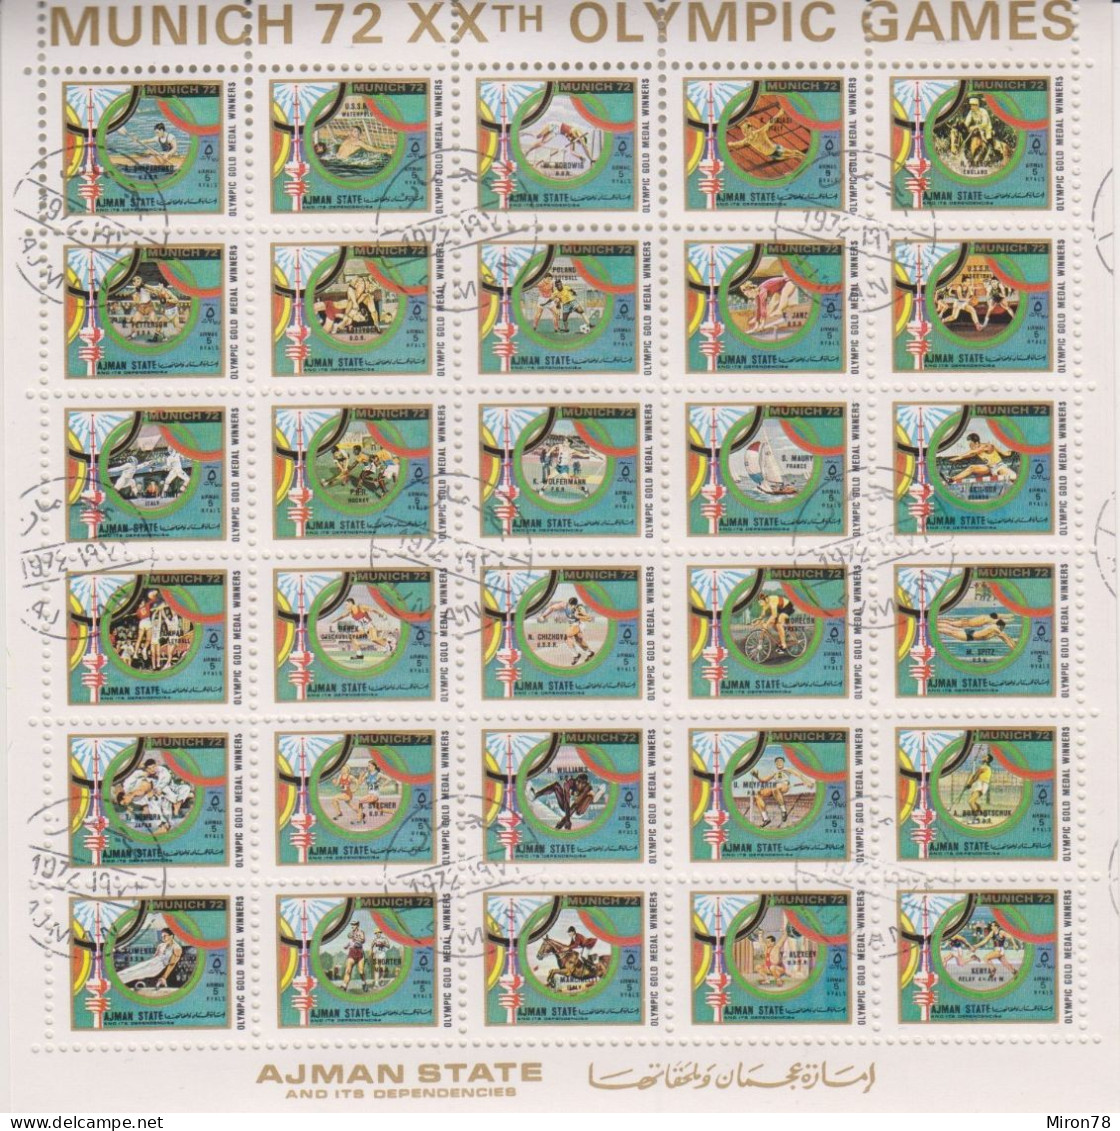 AJMAN OLYMPIC GAMES MUNICH 1972 #1605-34 SH USED (MNH-MICHEL 150 EURO!!!) - Unclassified